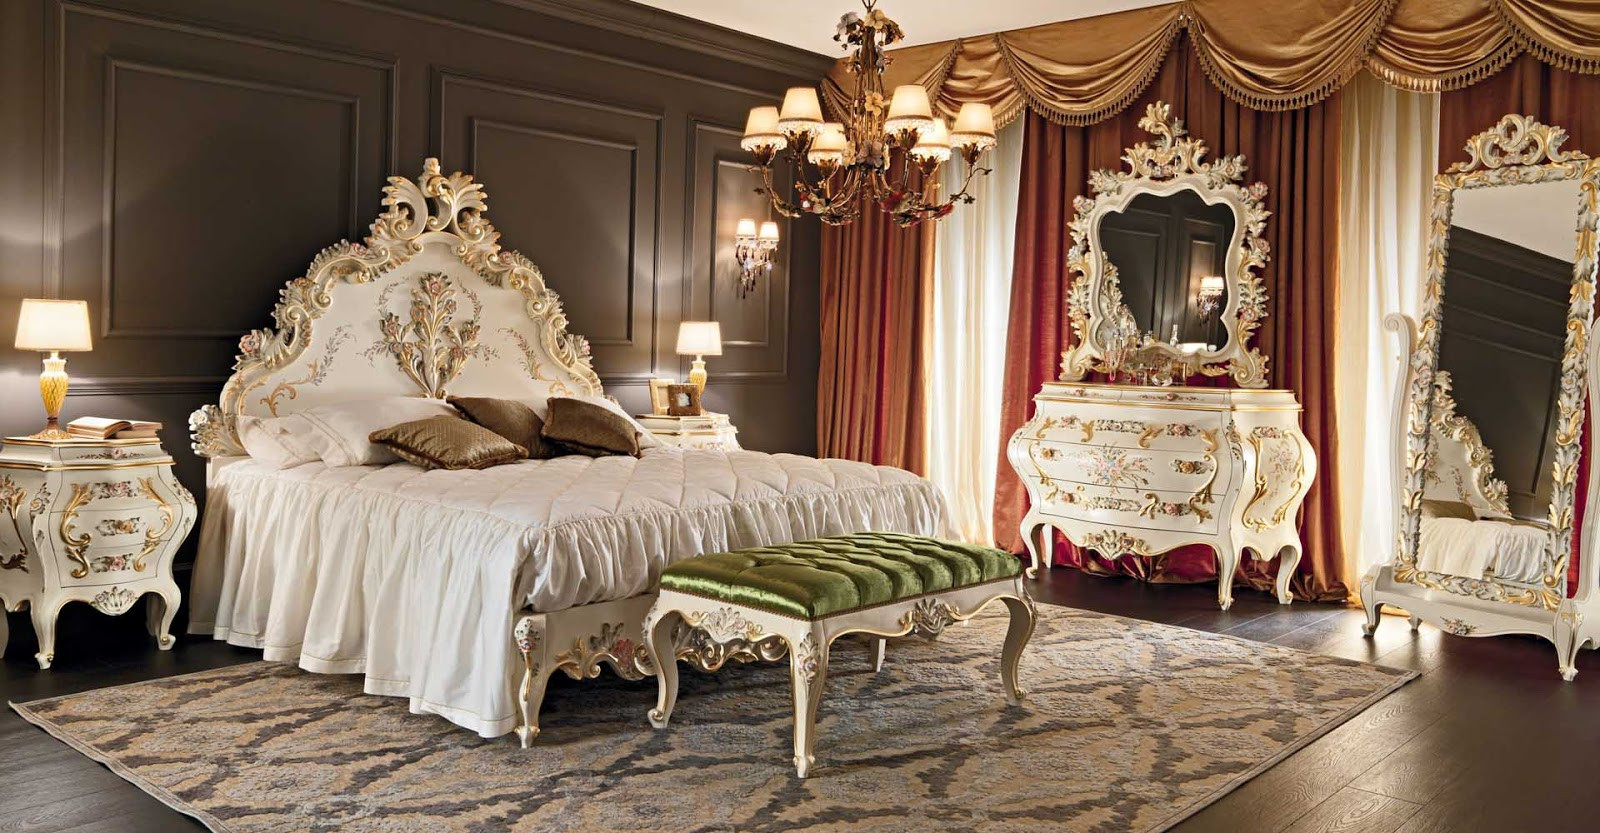 Luxurious Master Bedroom Furniture
 23 Amazing Luxury Bedroom Furniture Ideas Home Design